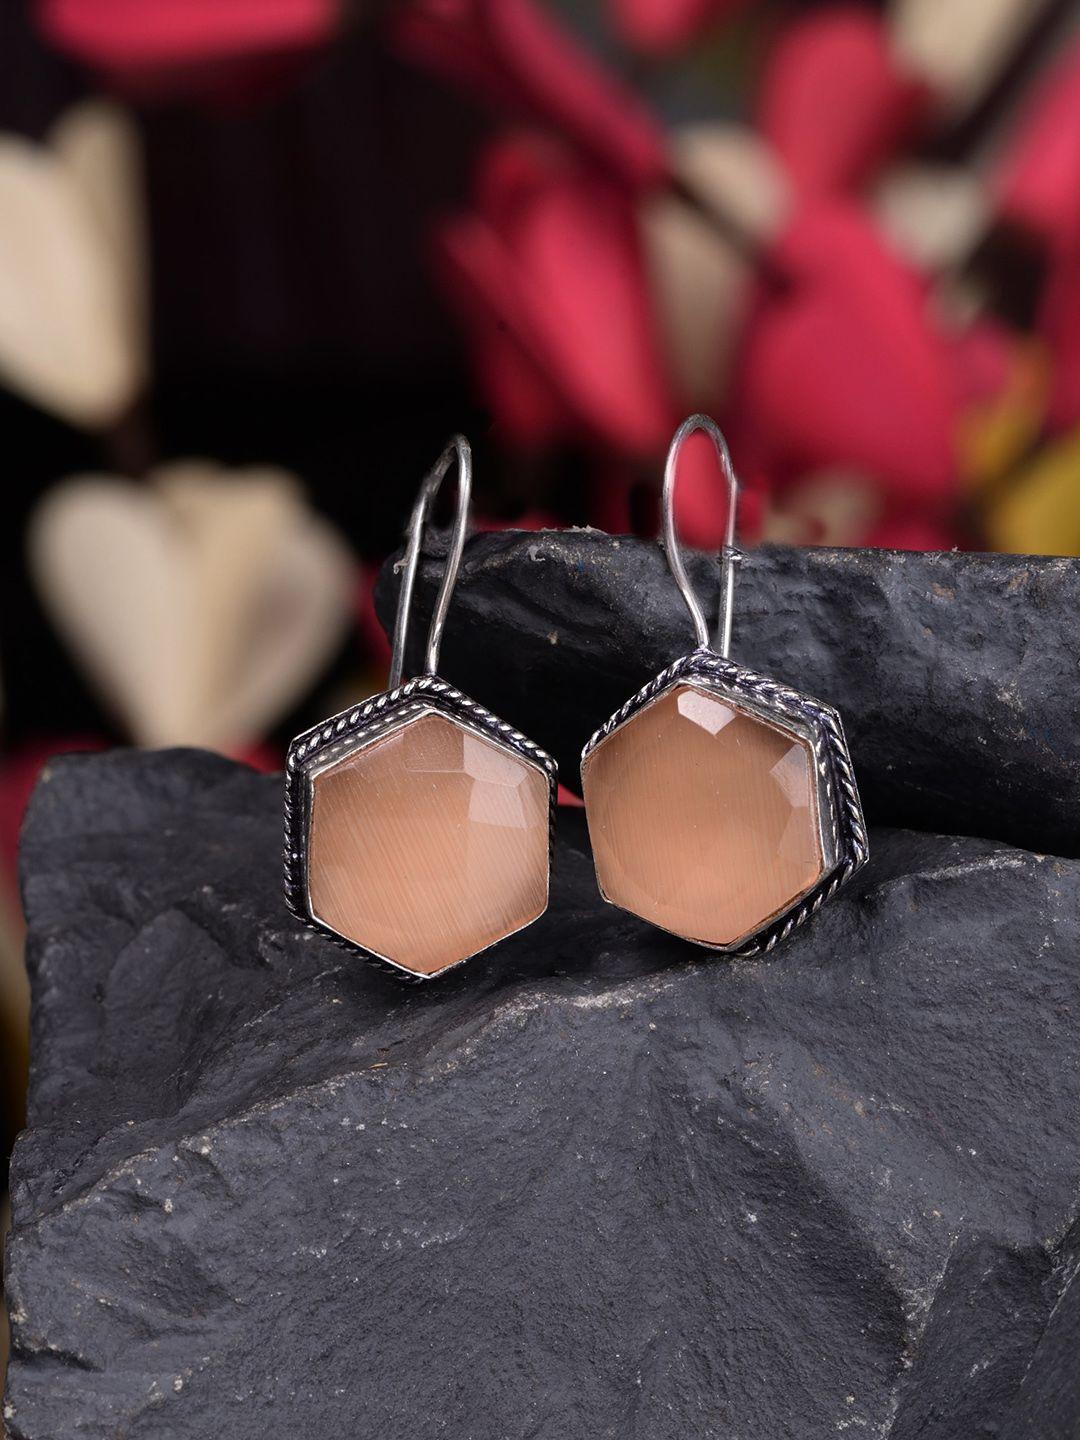 saraf rs jewellery peach-coloured geometric drop earrings